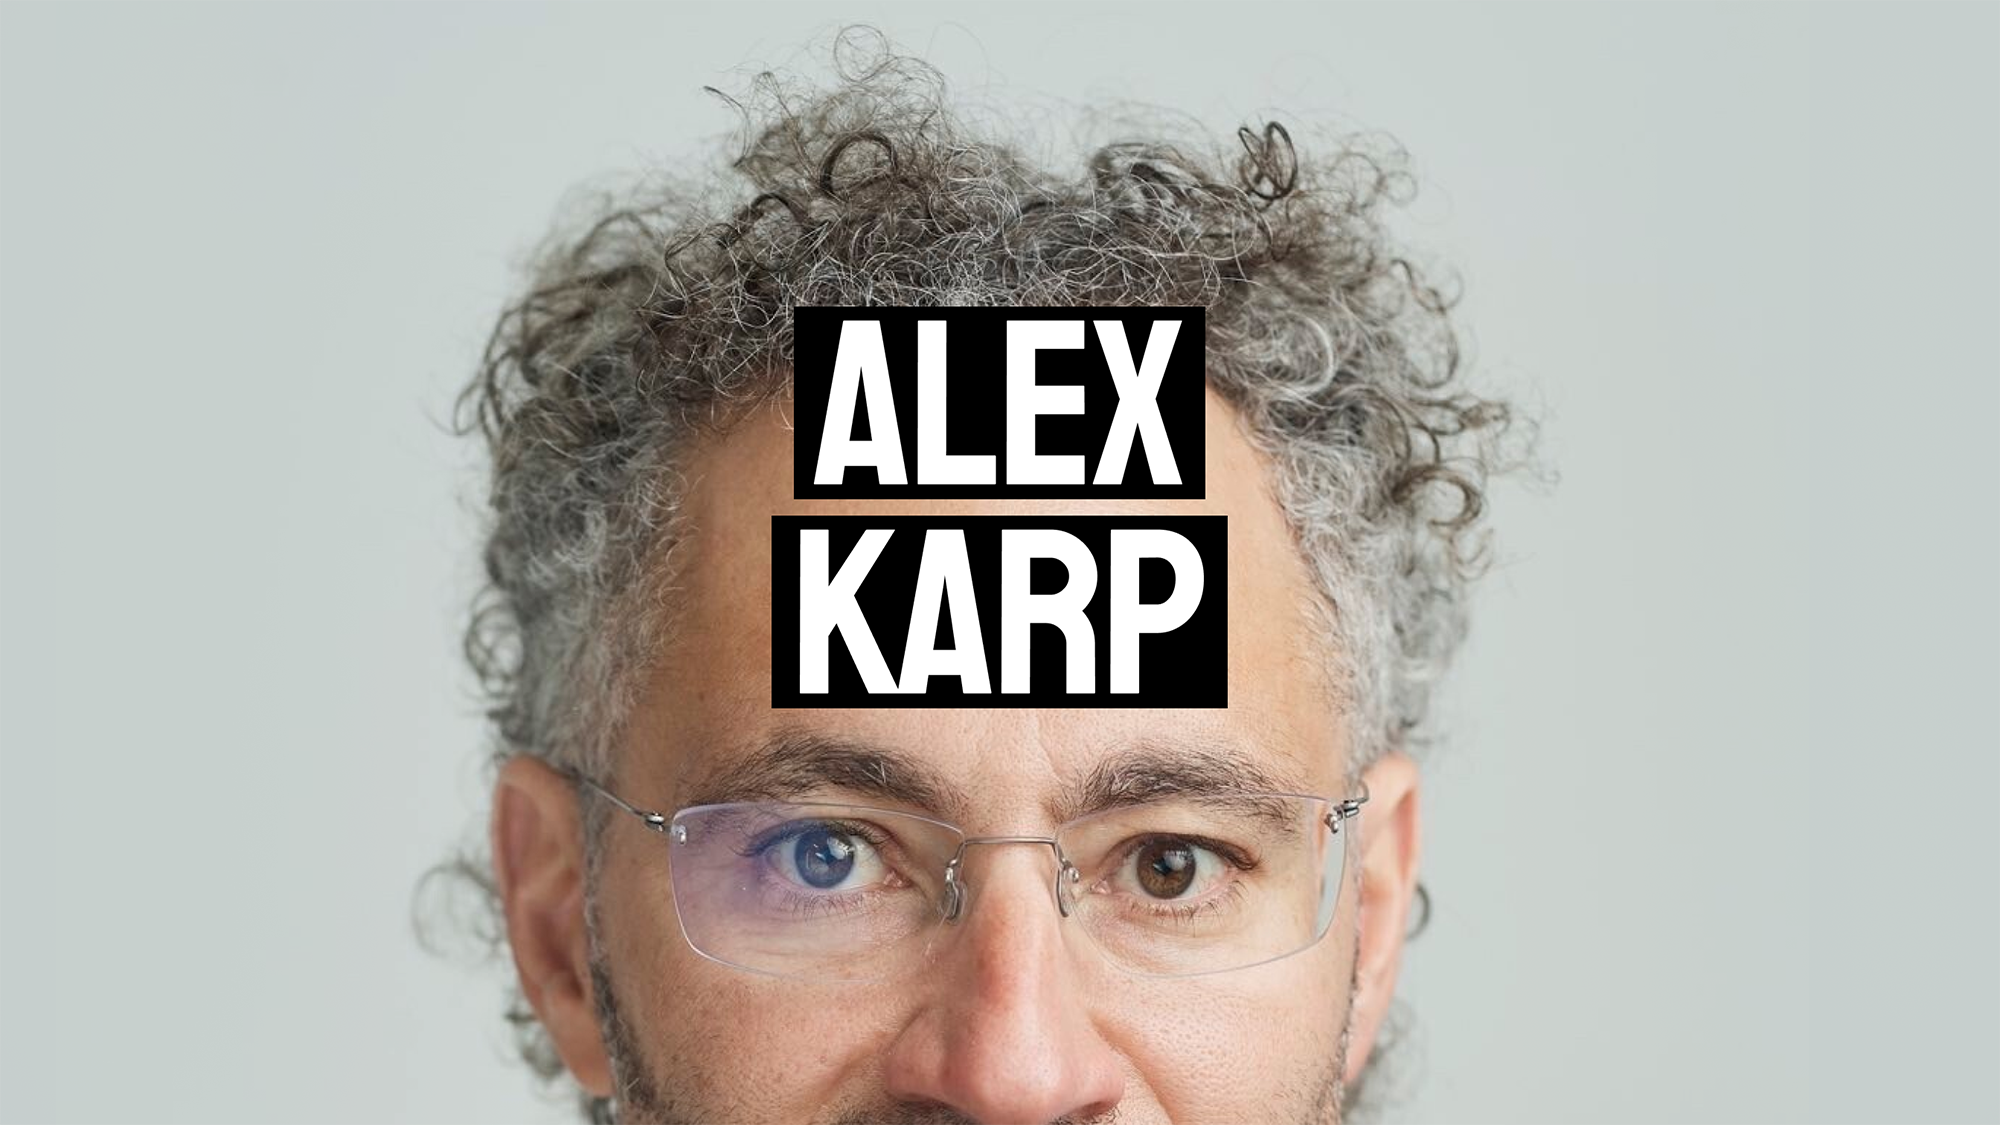 Alex Karp: The Unconventional Tech Visionary and CEO of Palantir